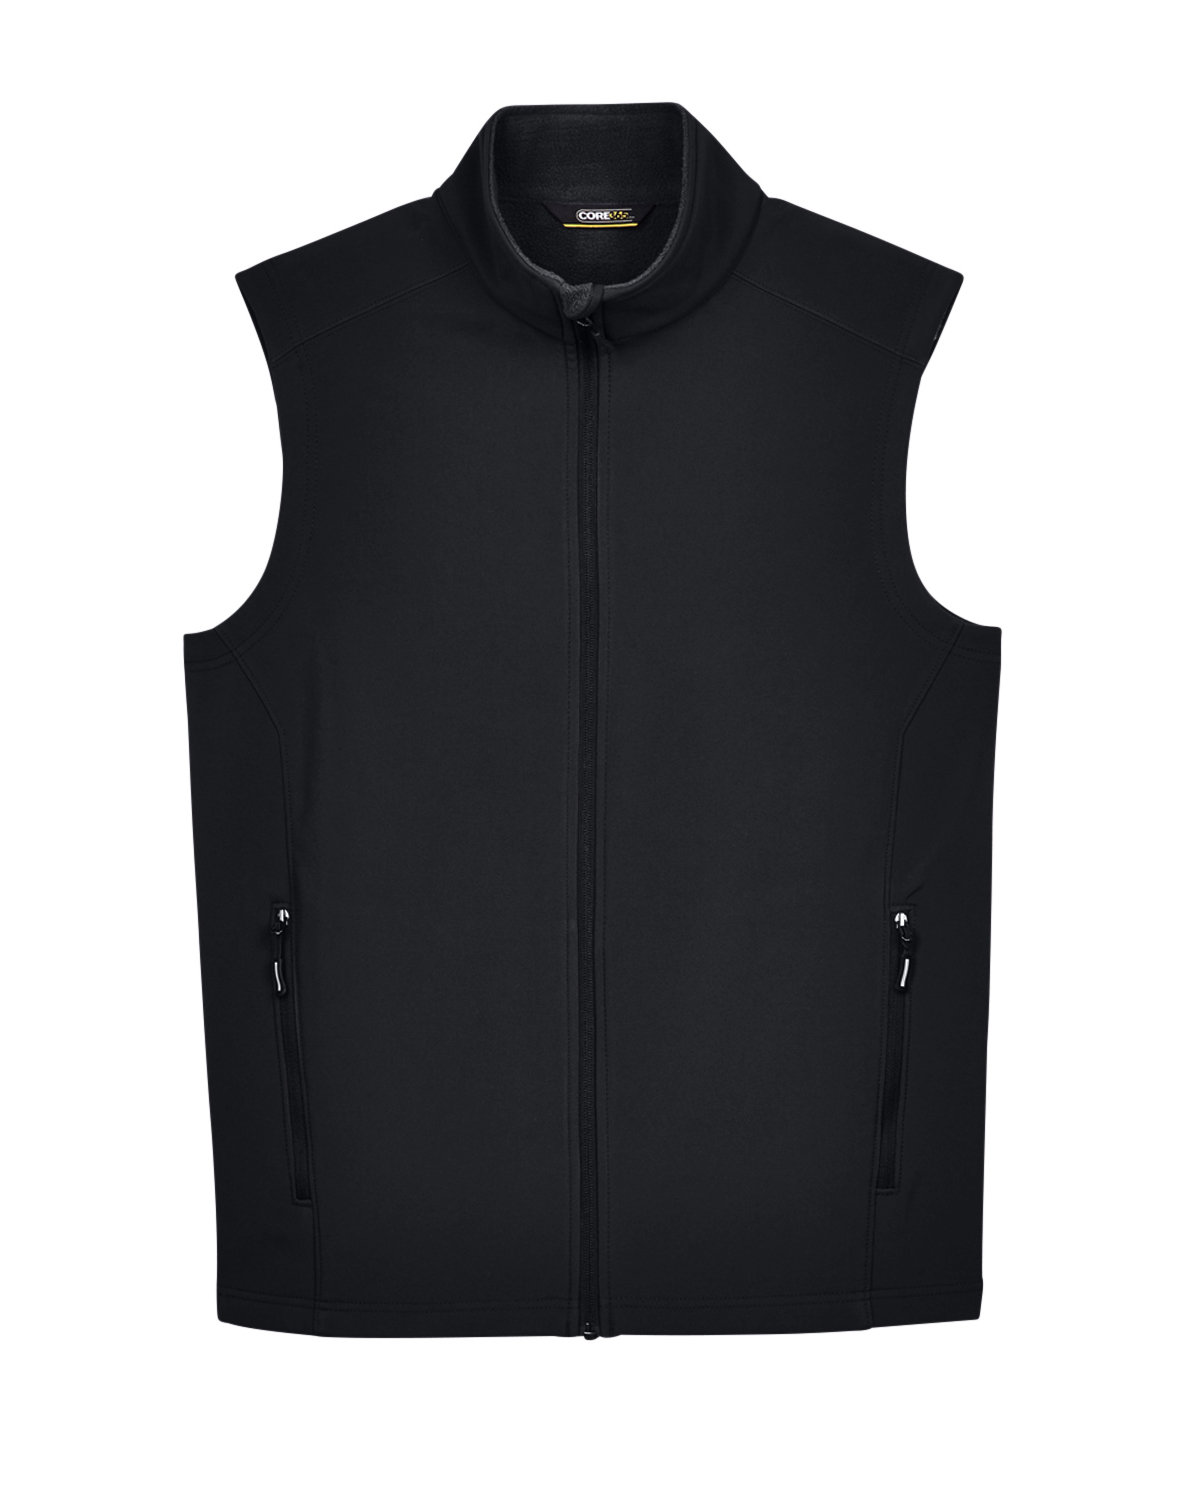 Core365 Men's Cruise Two-Layer Fleece Bonded Soft Shell Vest ...